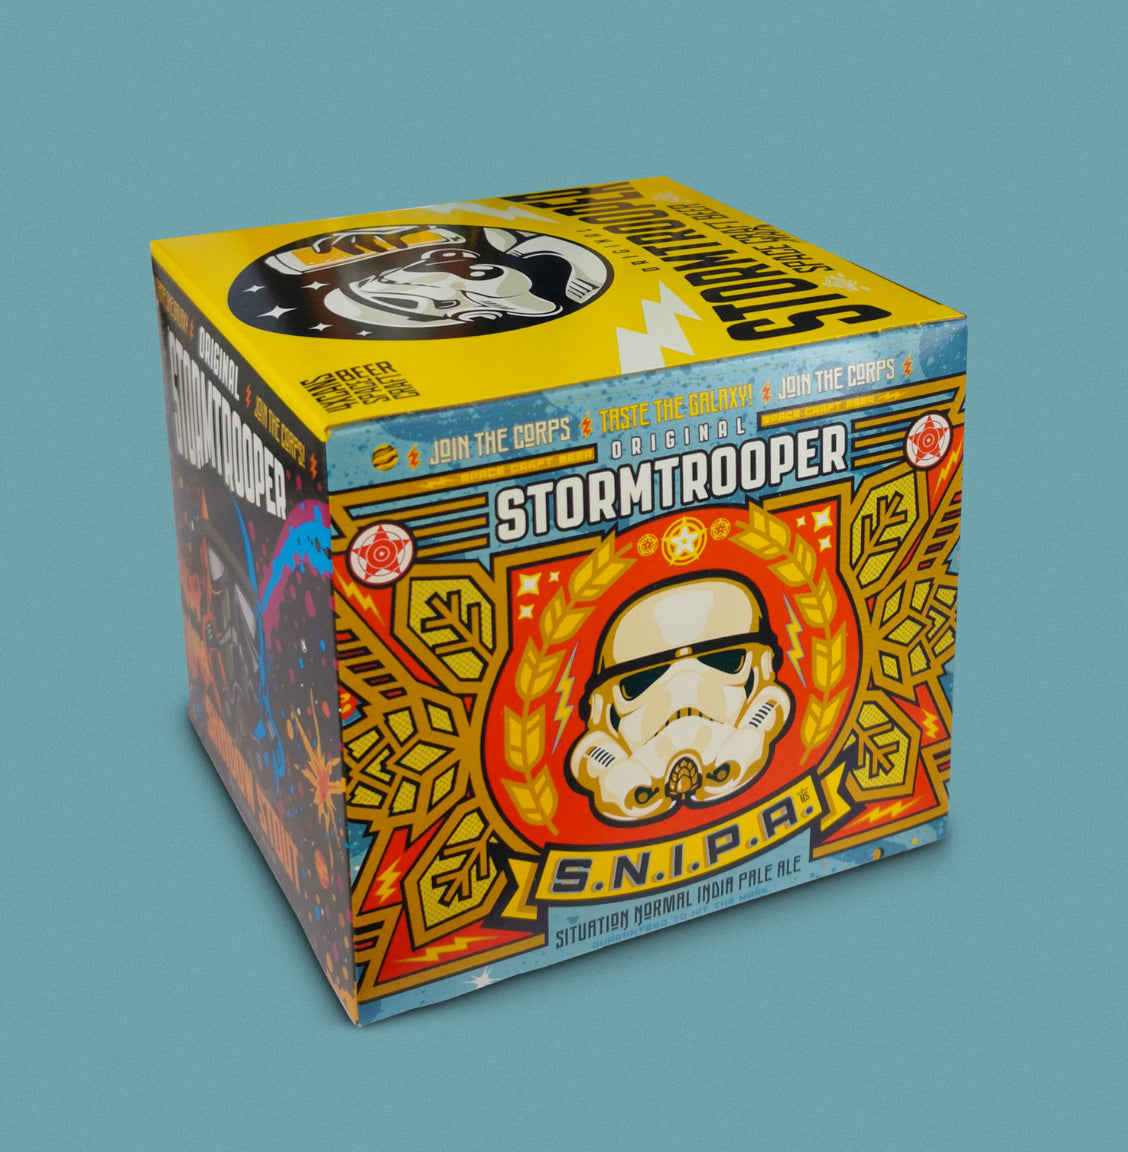 Stormtrooper Beer S.N.I.P.A. Fridge Pack